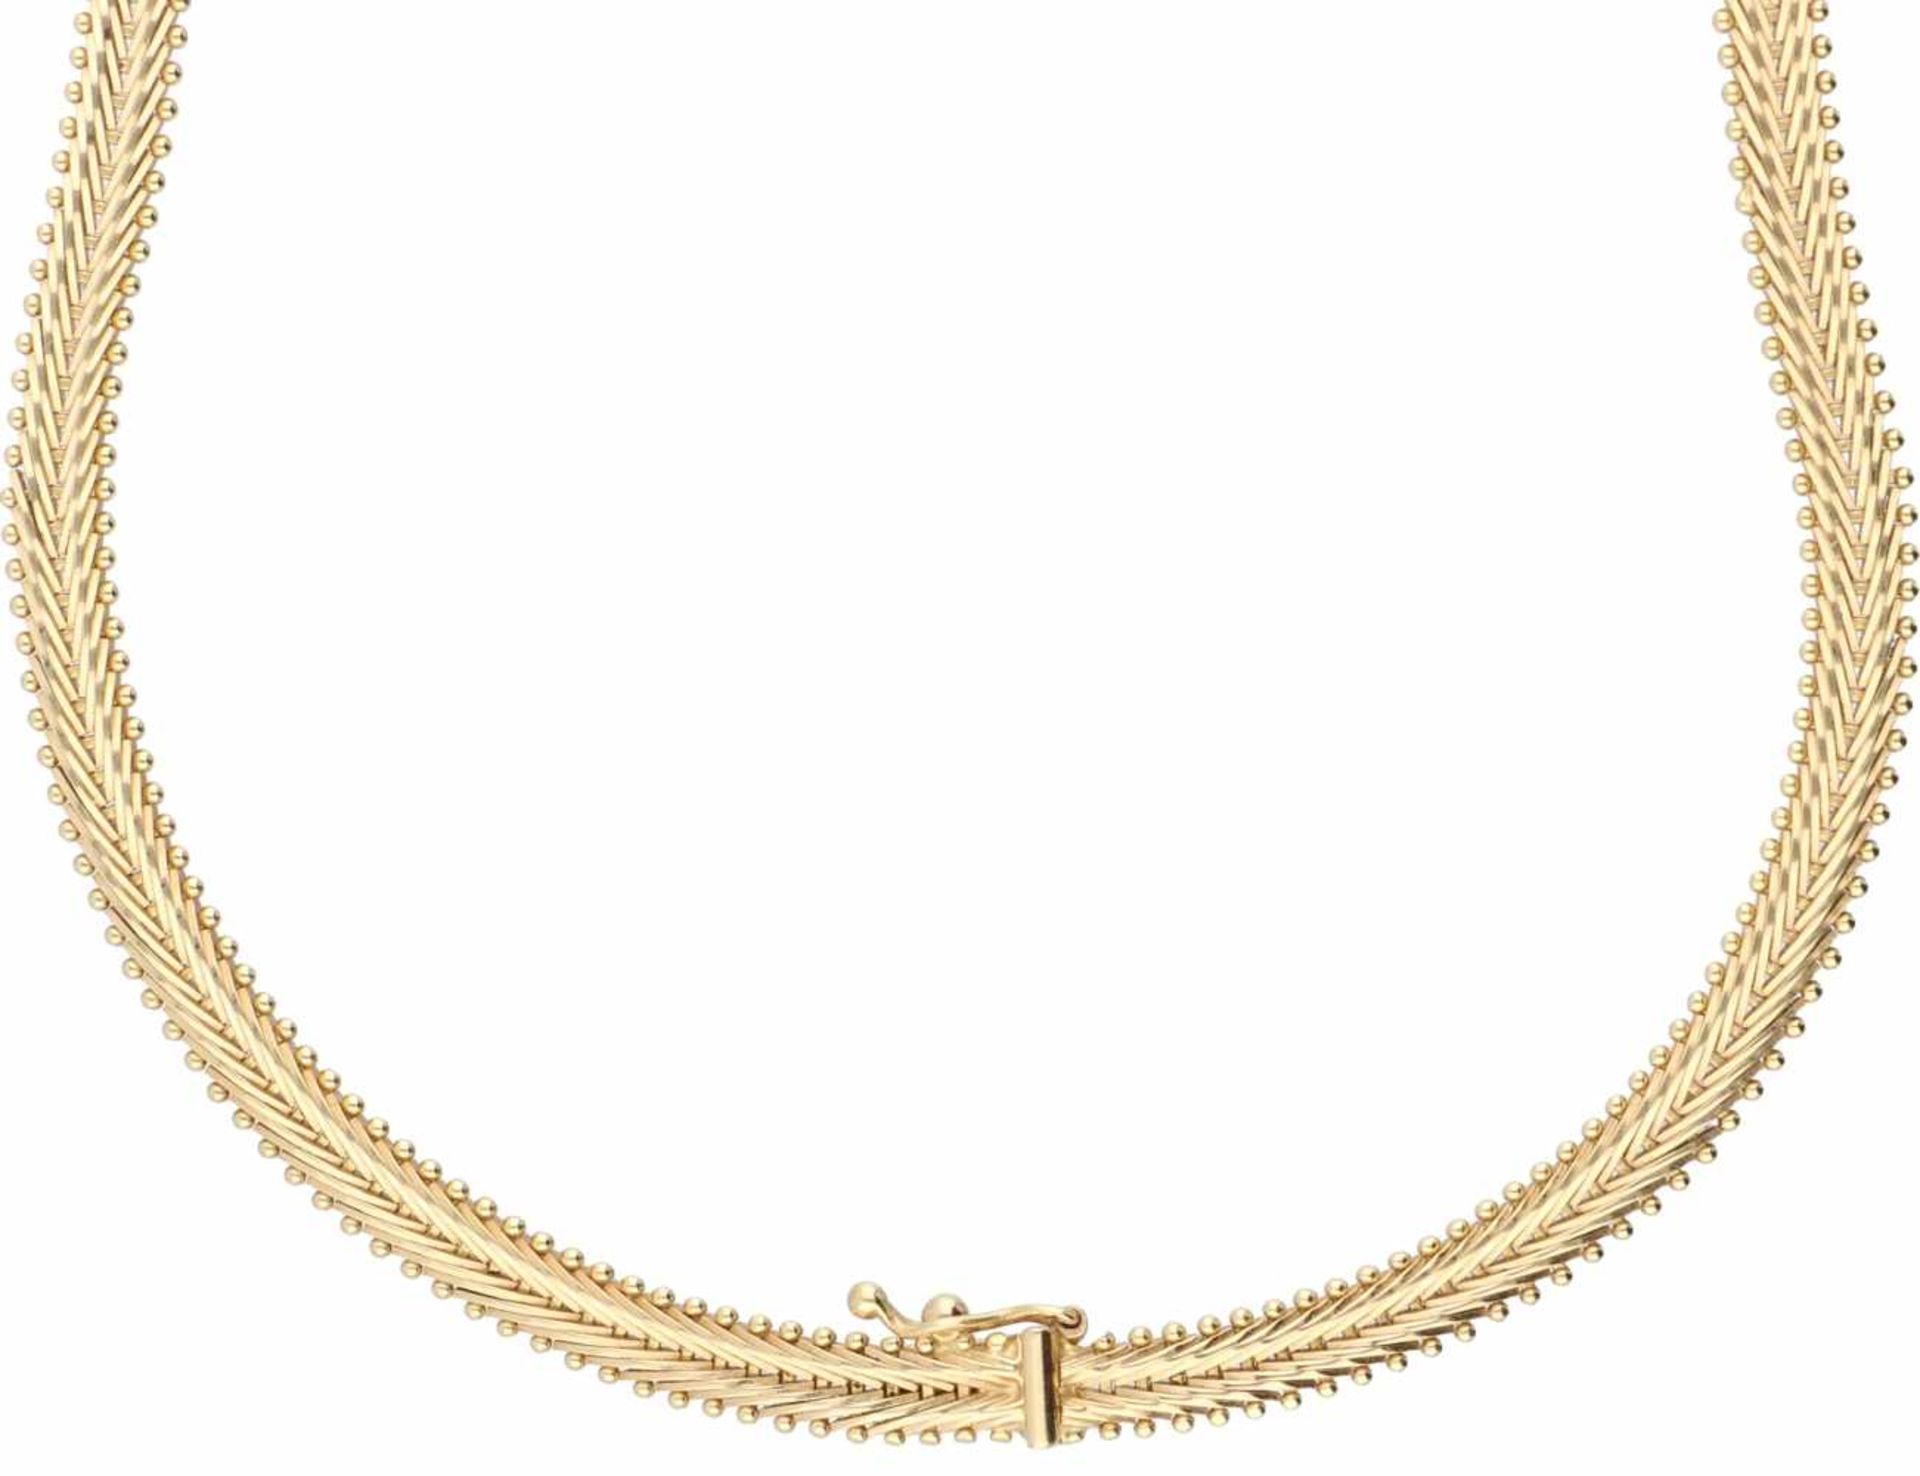 Necklace / bracelet yellow gold, ca. 0.43 carat diamond - 14 ct. - Bild 3 aus 5